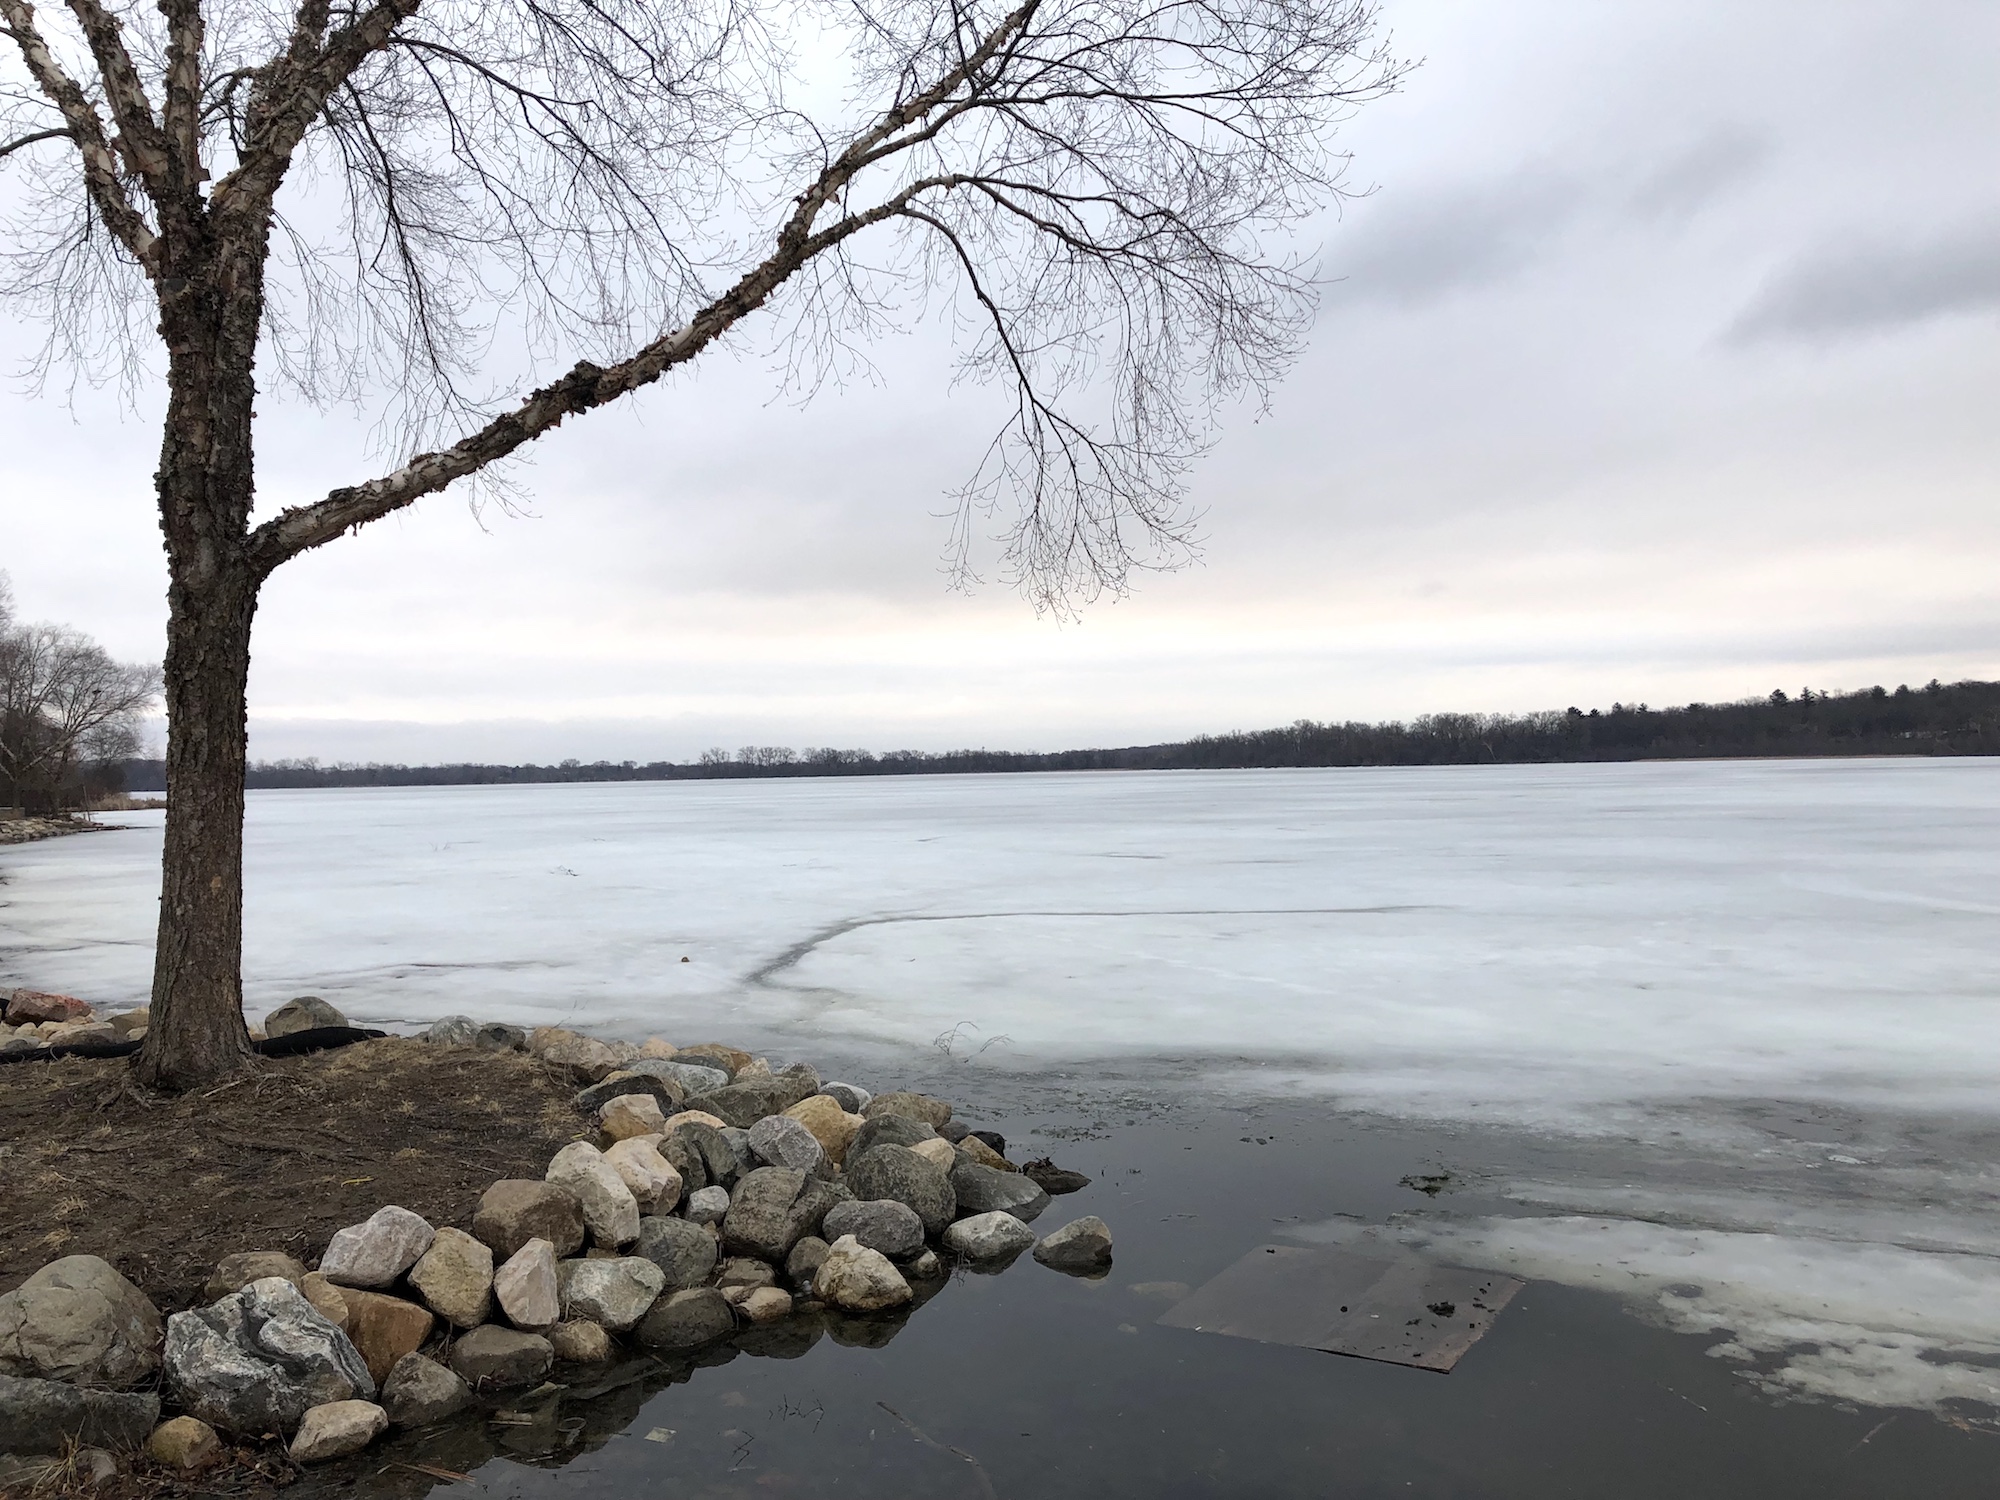 Lake Wingra on March 21, 2019.